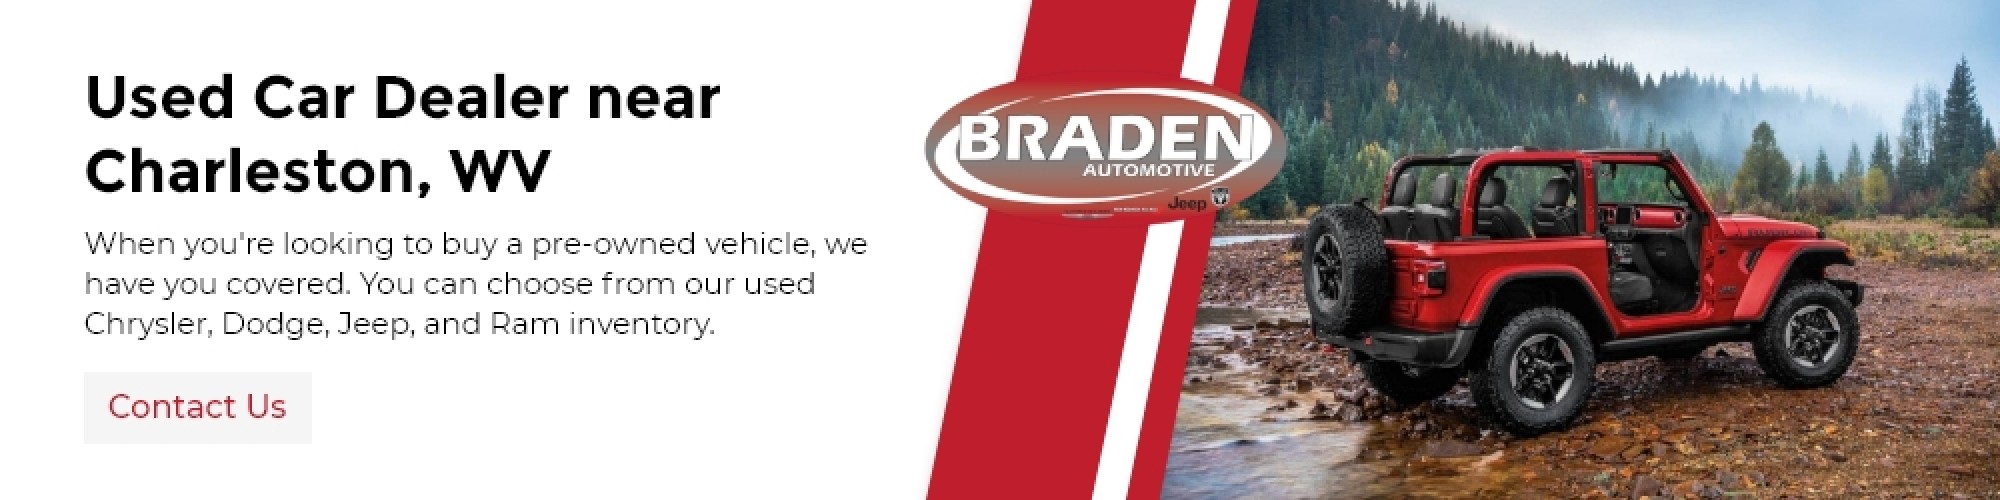 Braden Chrysler Dodge Jeep Ram cover image